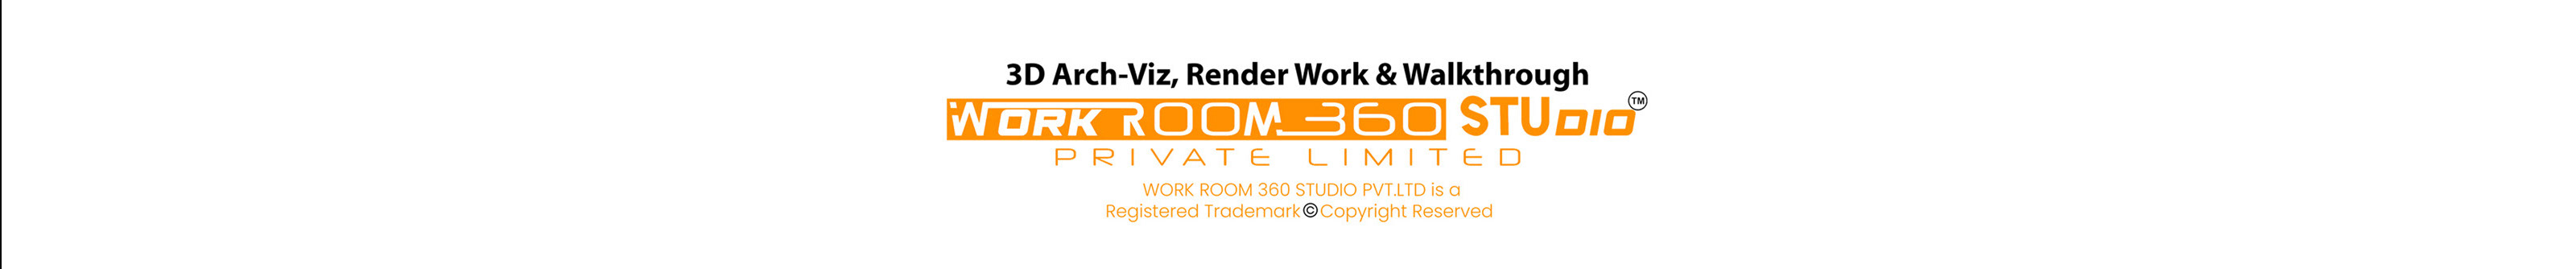 WORK ROOM 360 STUDIO's profile banner